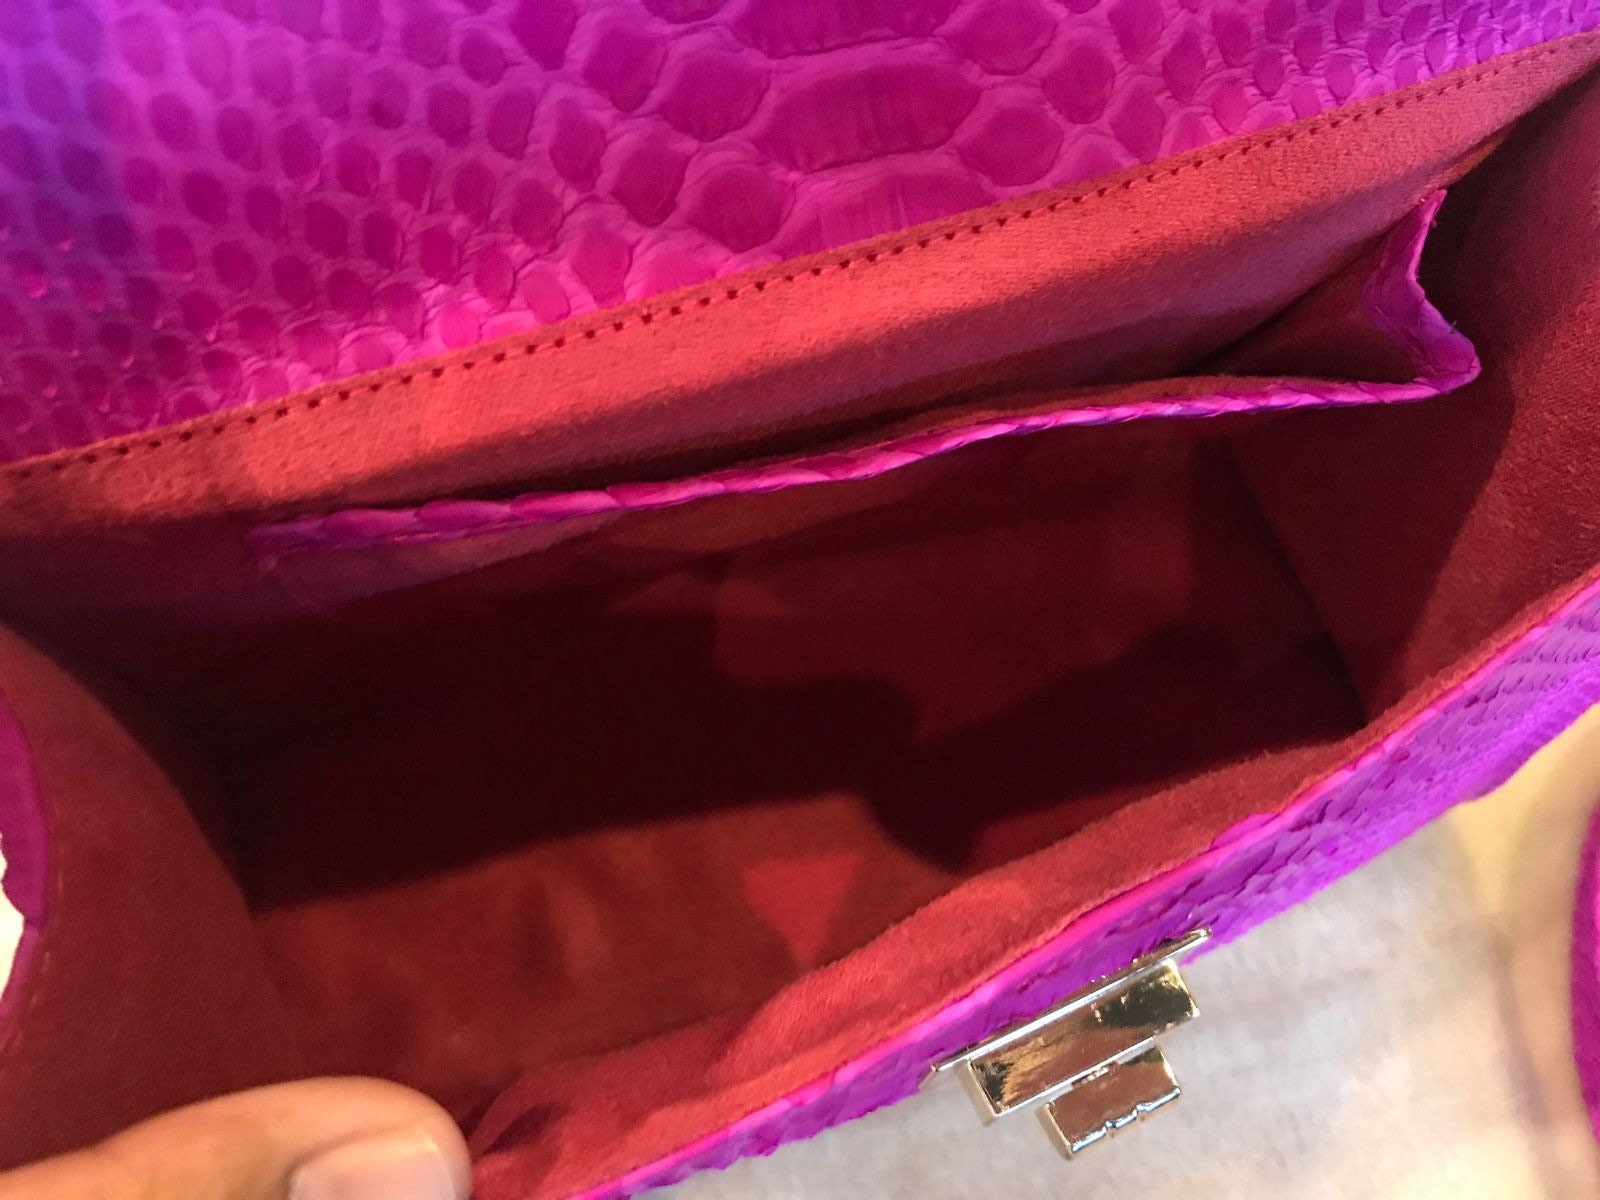 Top Handle Hot Pink Classy Genuine Python Skin Bag Exotic 